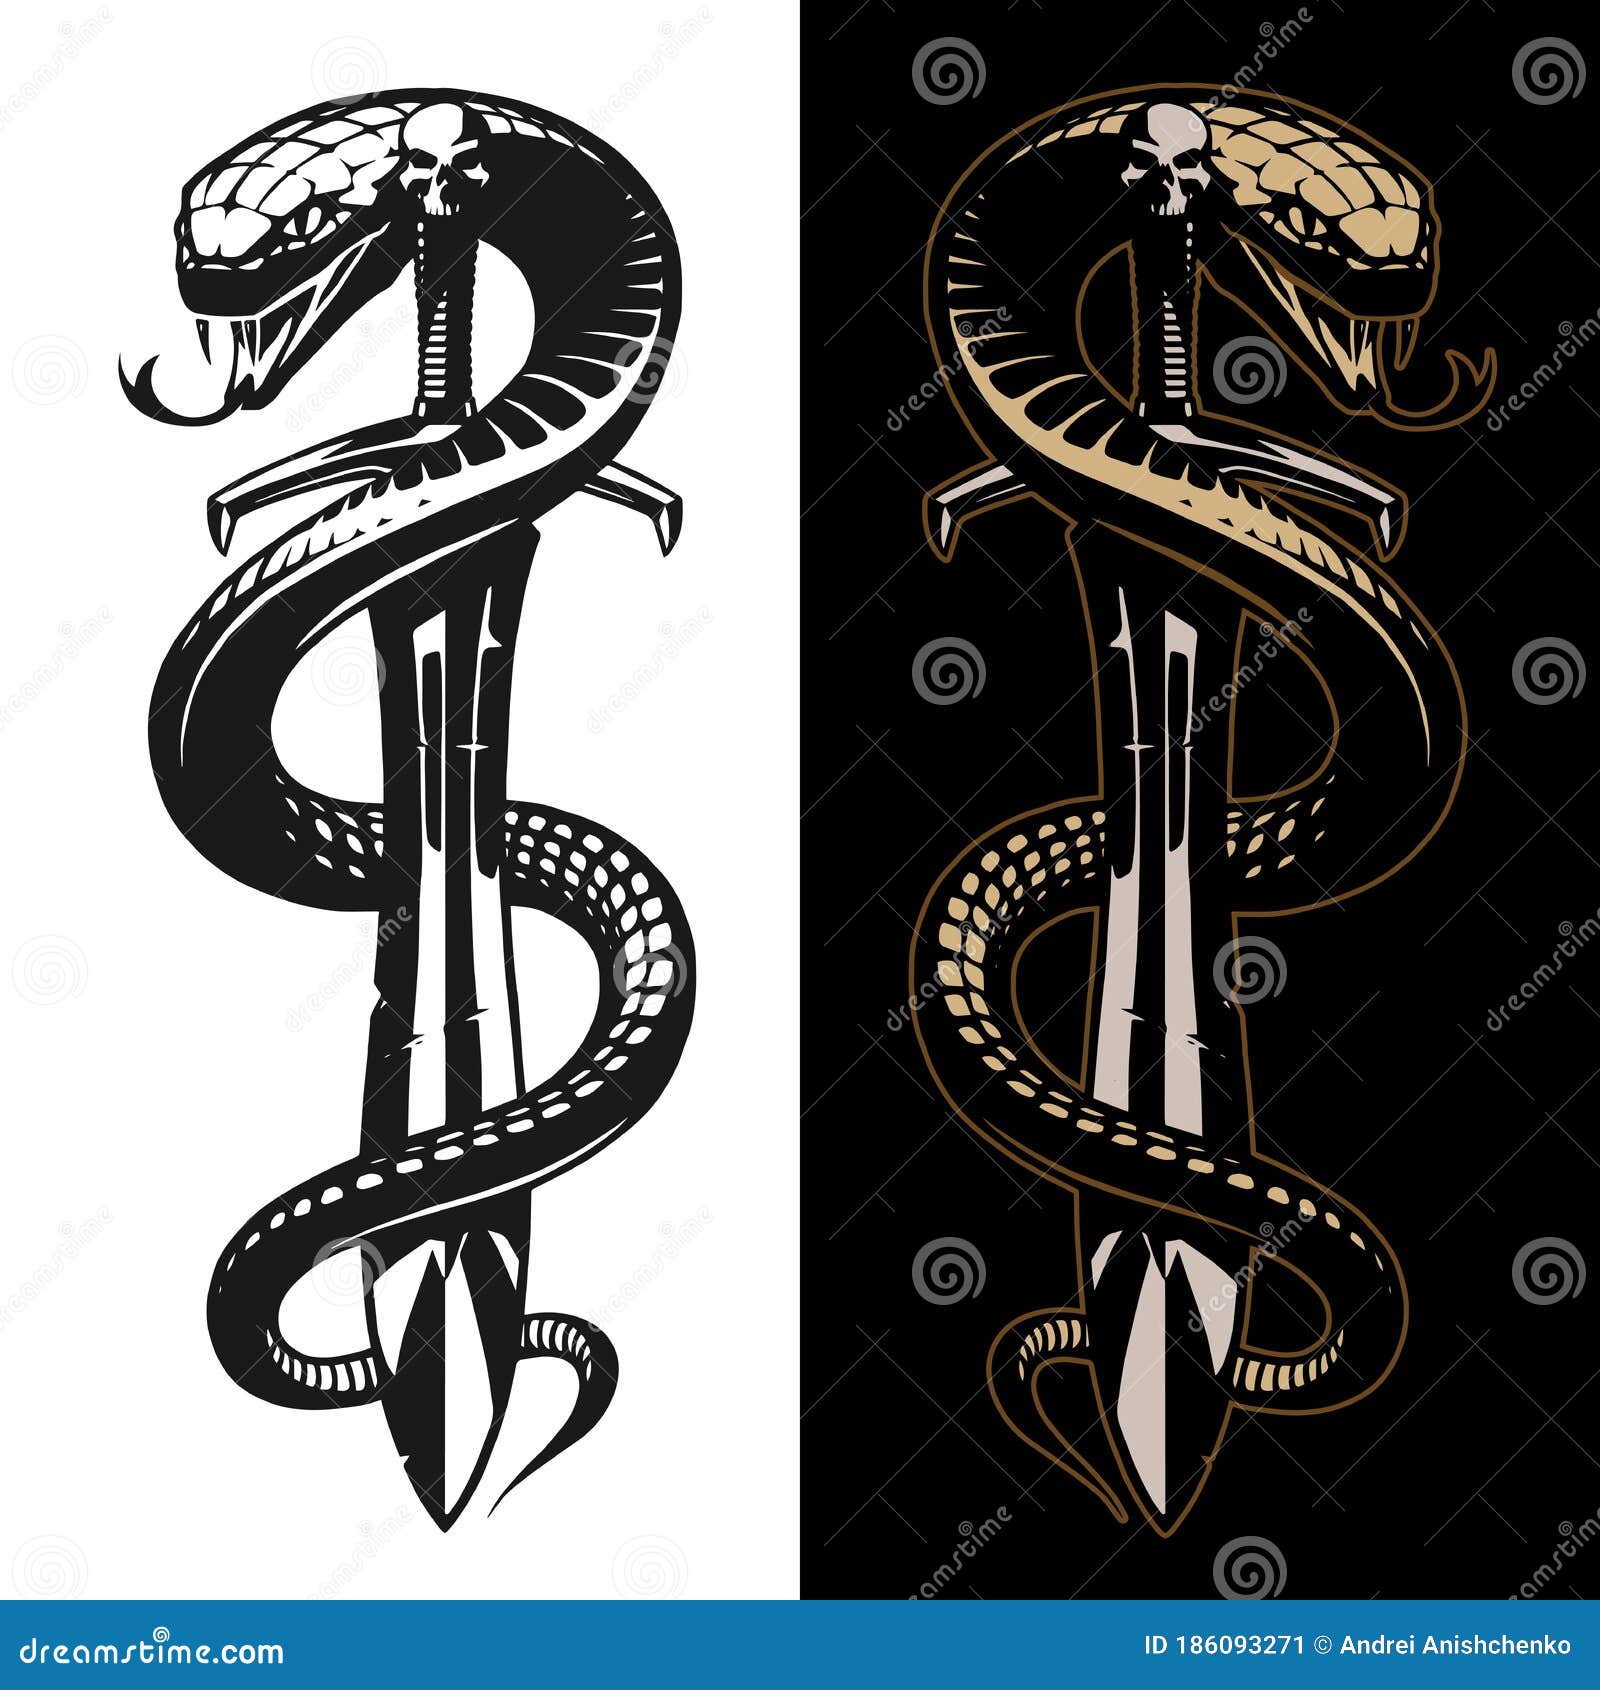 Snake and Sword Tattoo Illustration Stock Vector - Illustration of graphic,  danger: 186093271